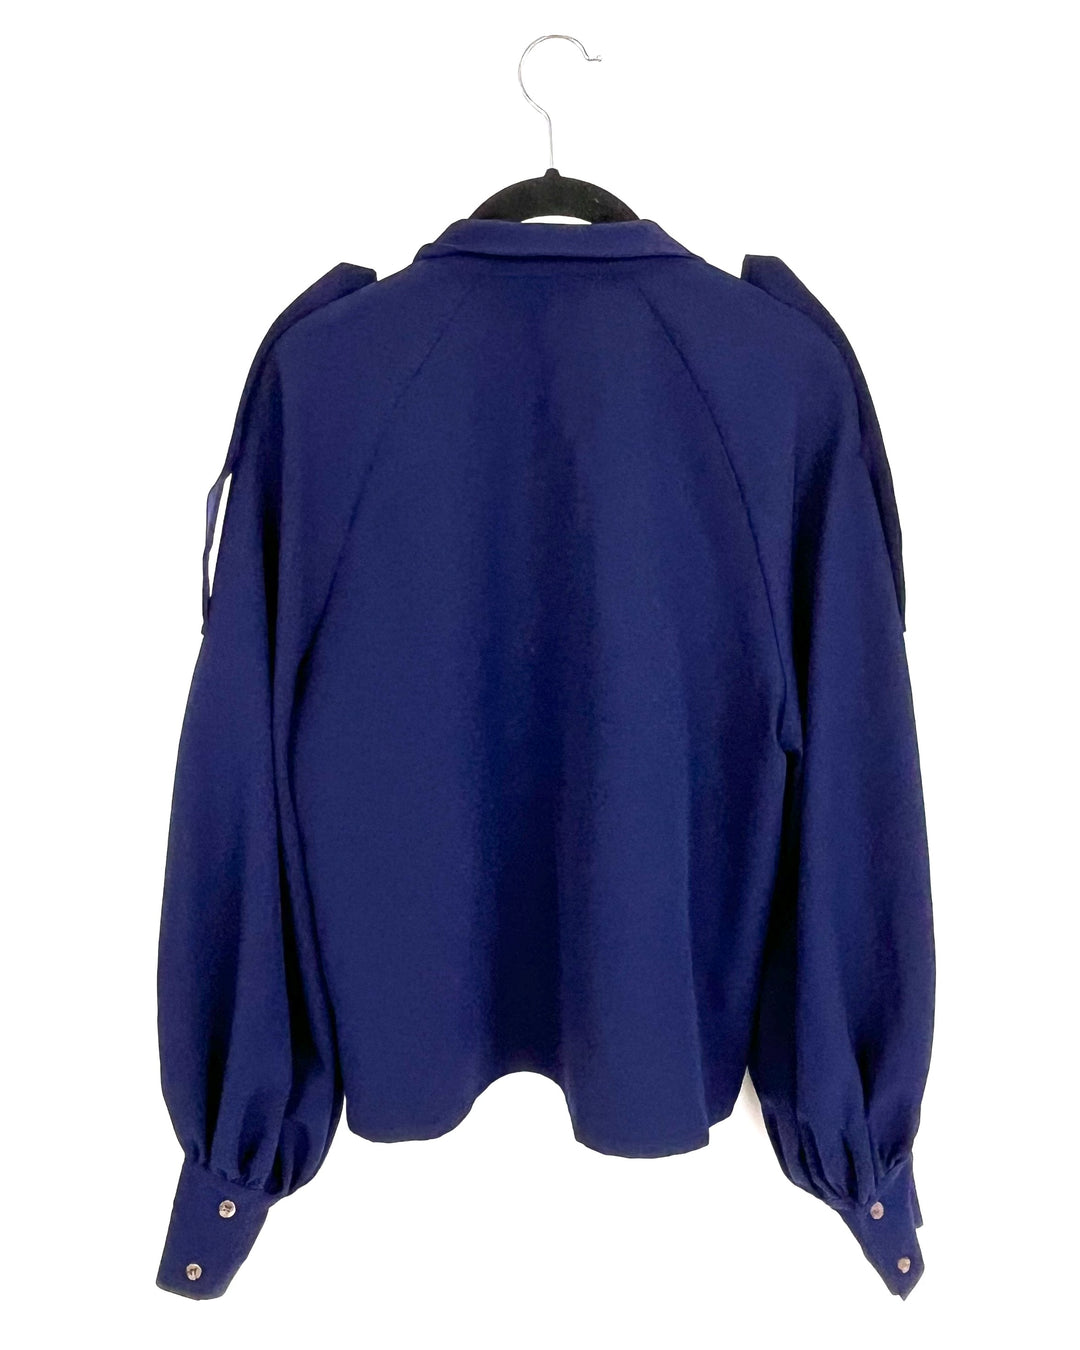 Dark Blue Button Up Lightweight Jacket / Blouse - Size 8